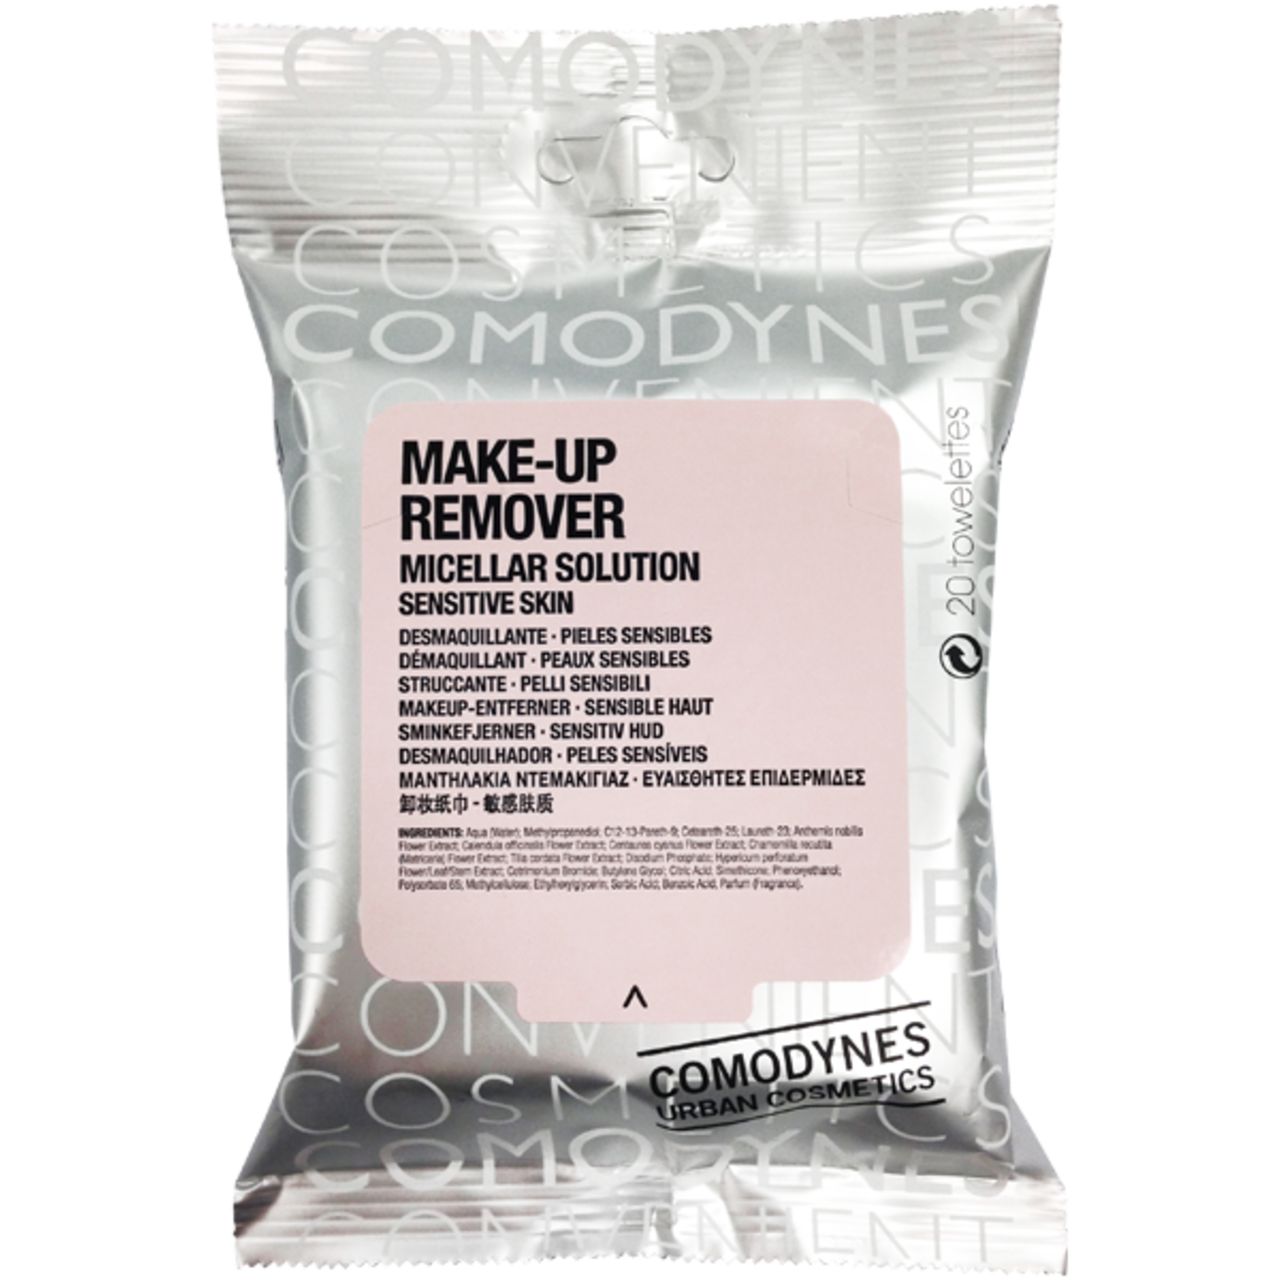 Comodynes, Make-Up Remover Micellar Solution Sensitive Skin